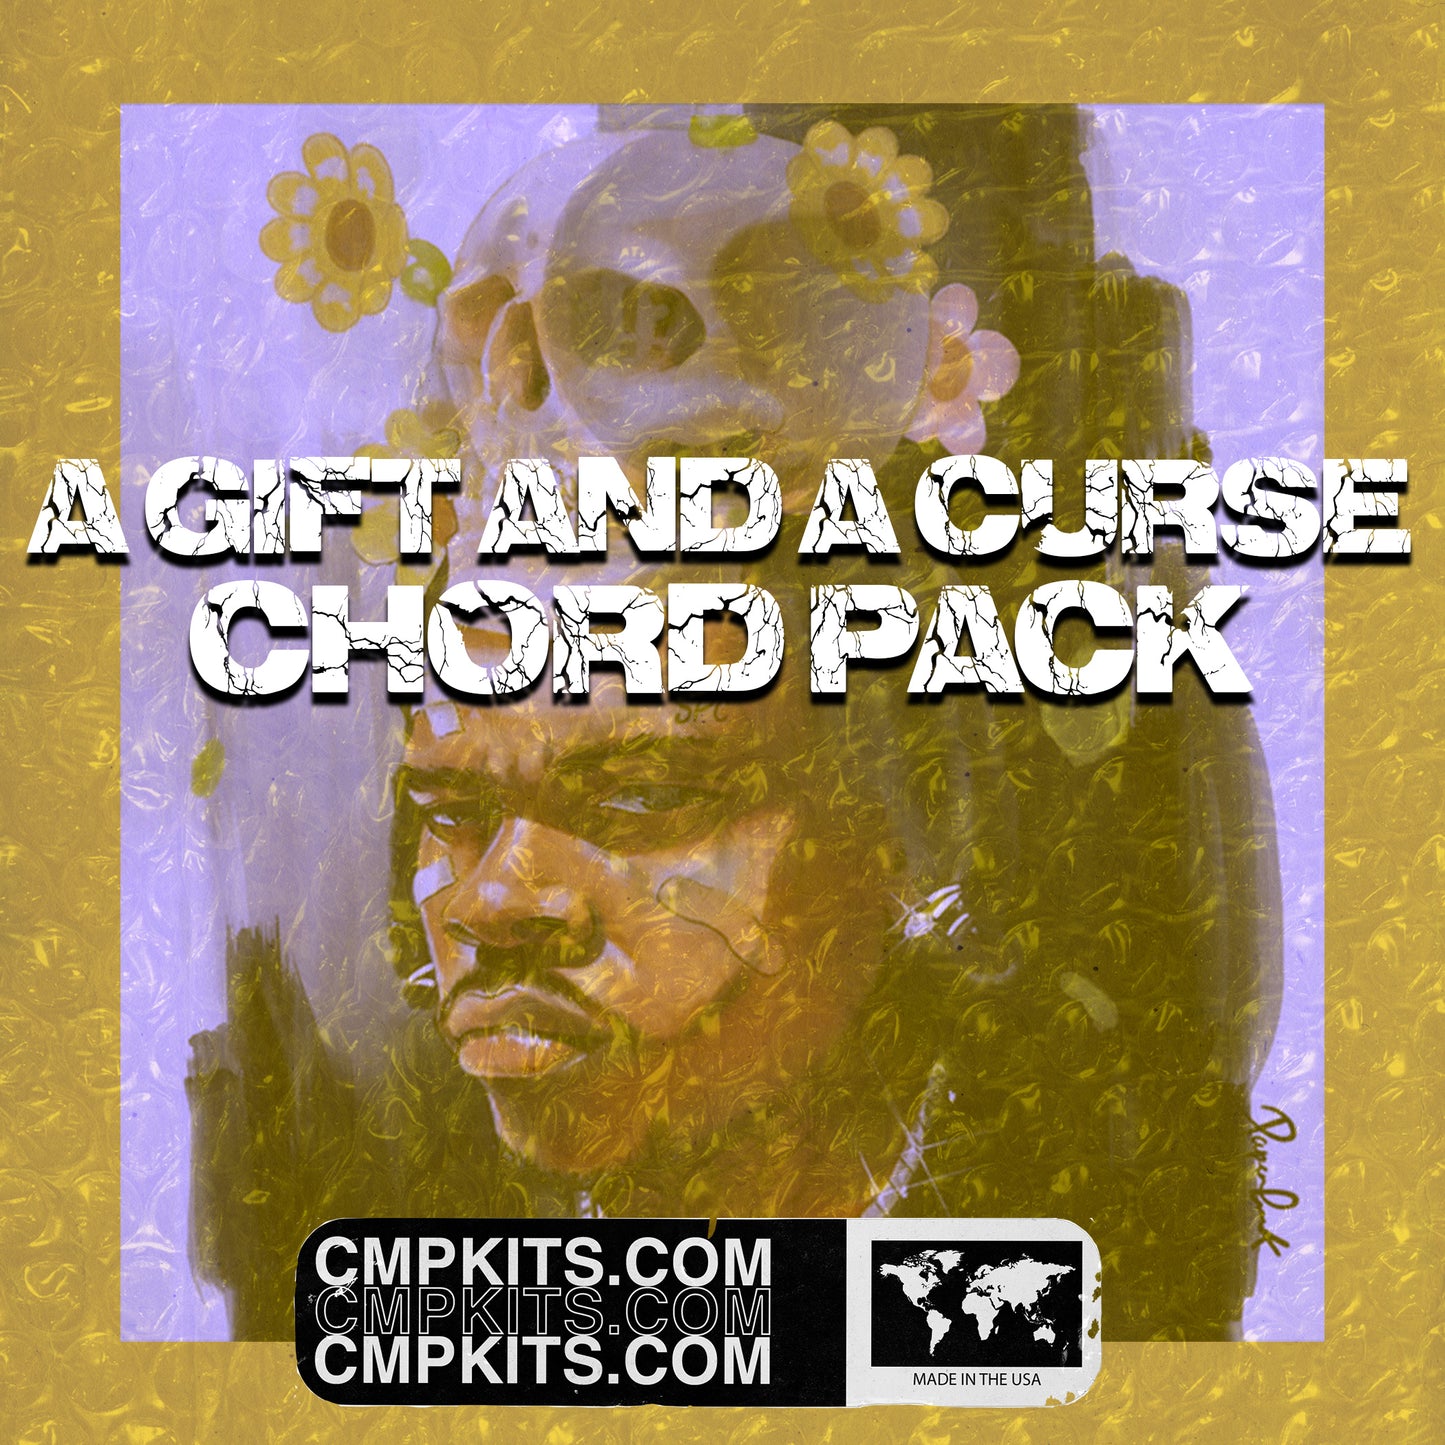 Gunna - a Gift and a Curse Chord Pack (MIDI, Scaler, Ripchord presets)